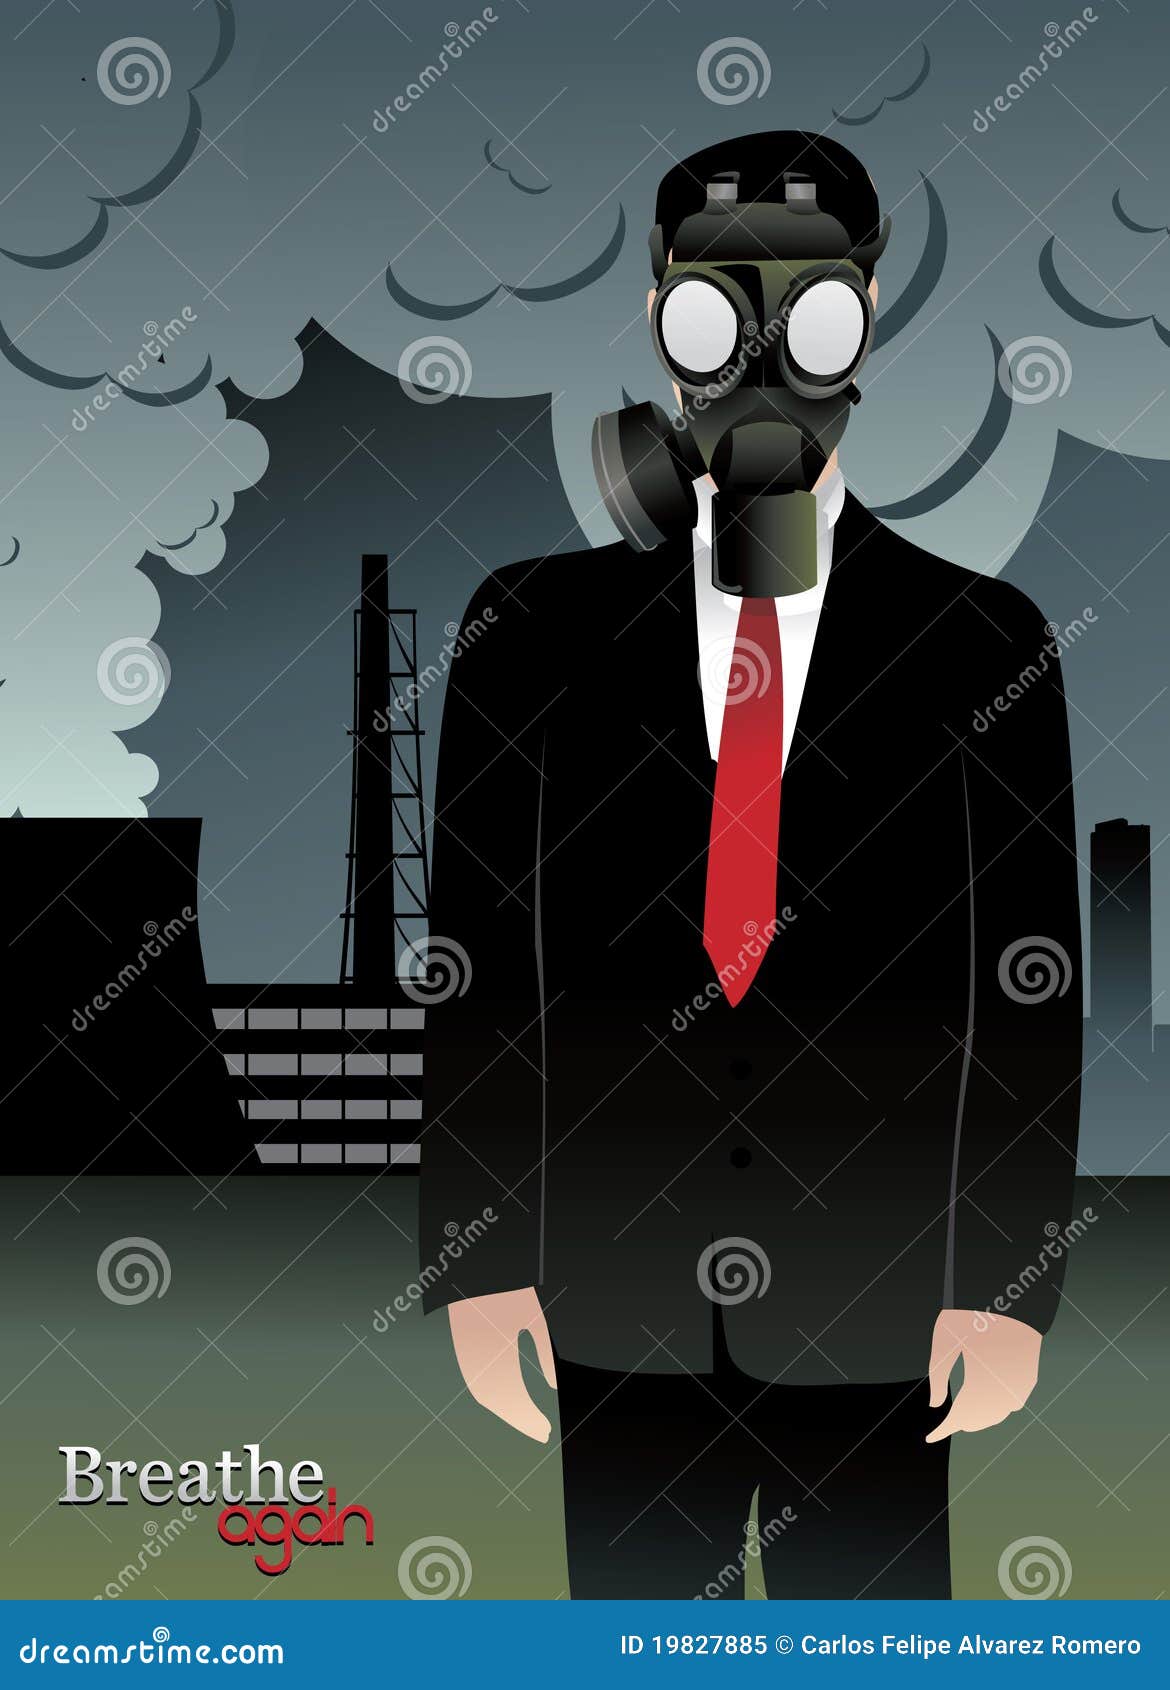 mask for polution